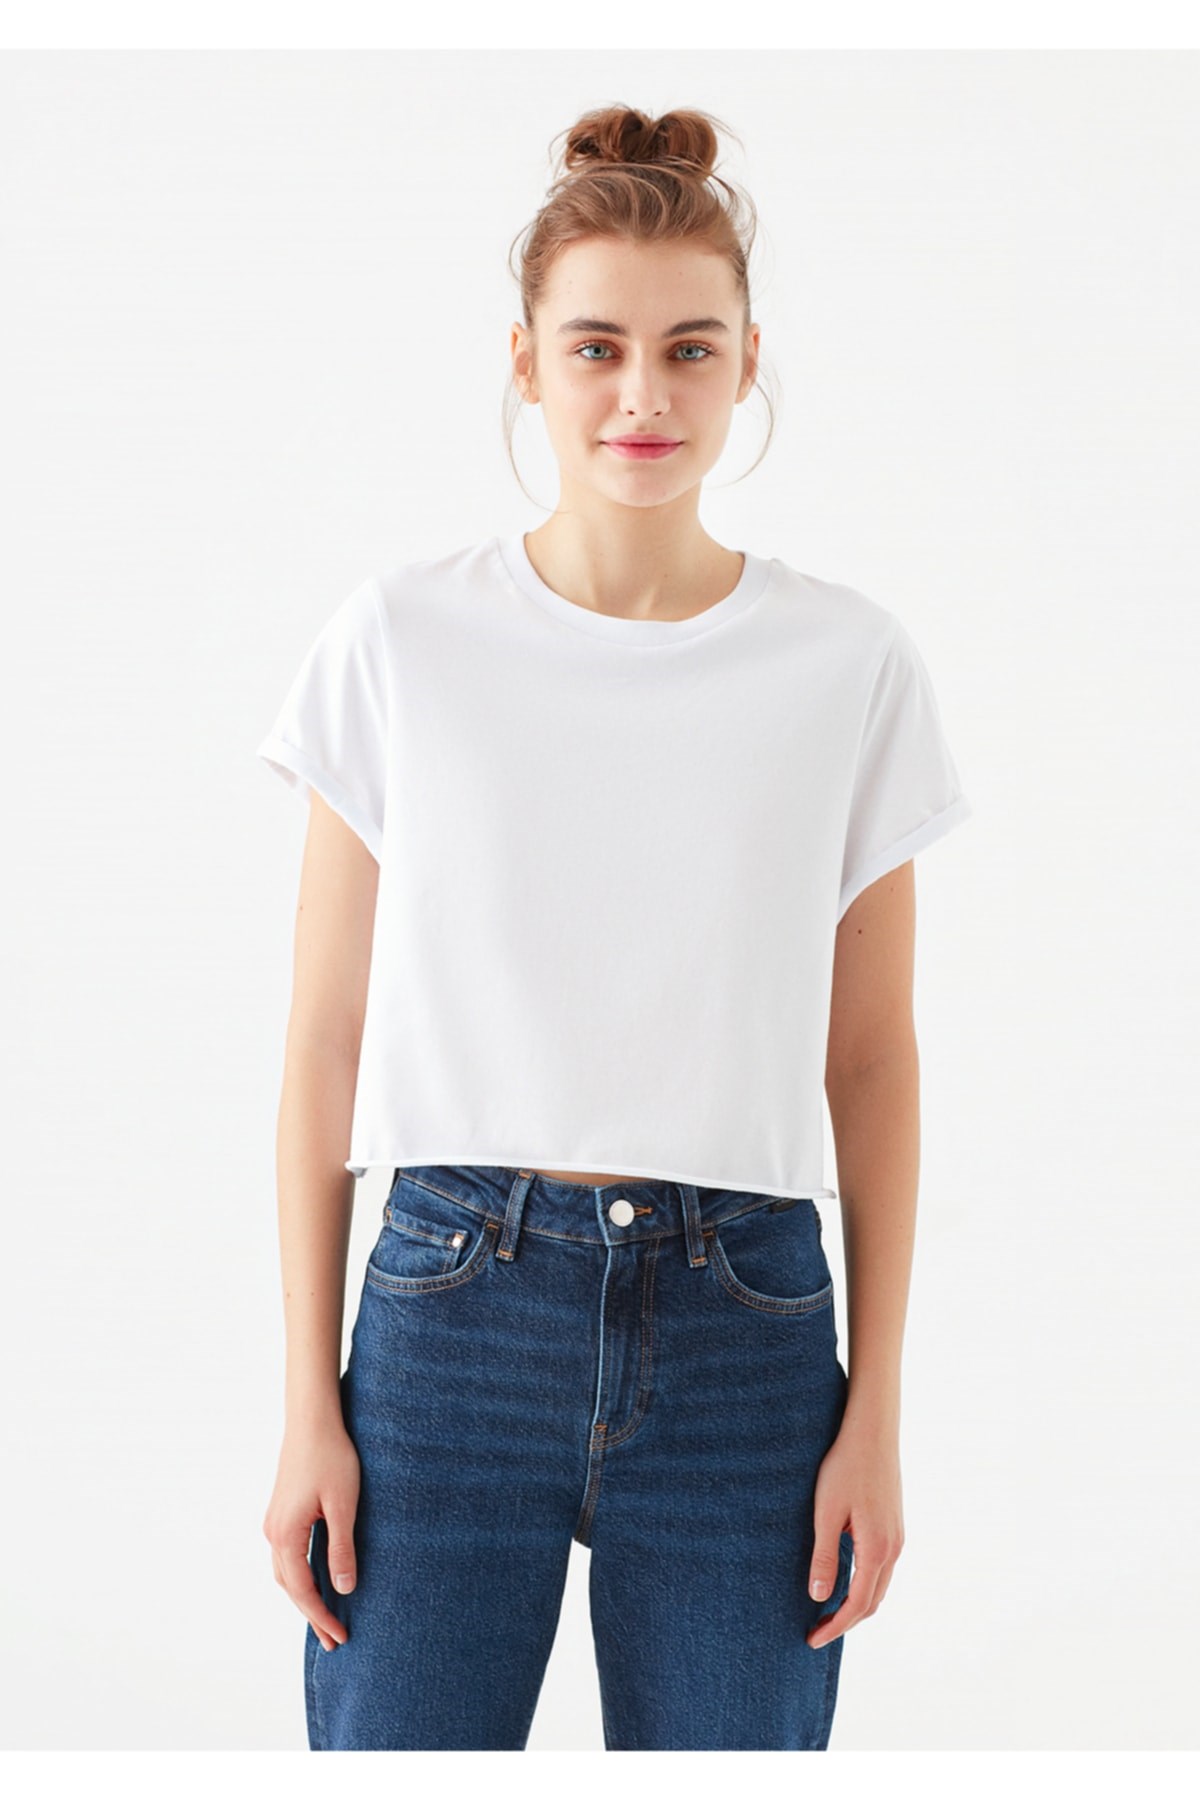 Mavi Jeans Kadın T-Shirt 168220-620 